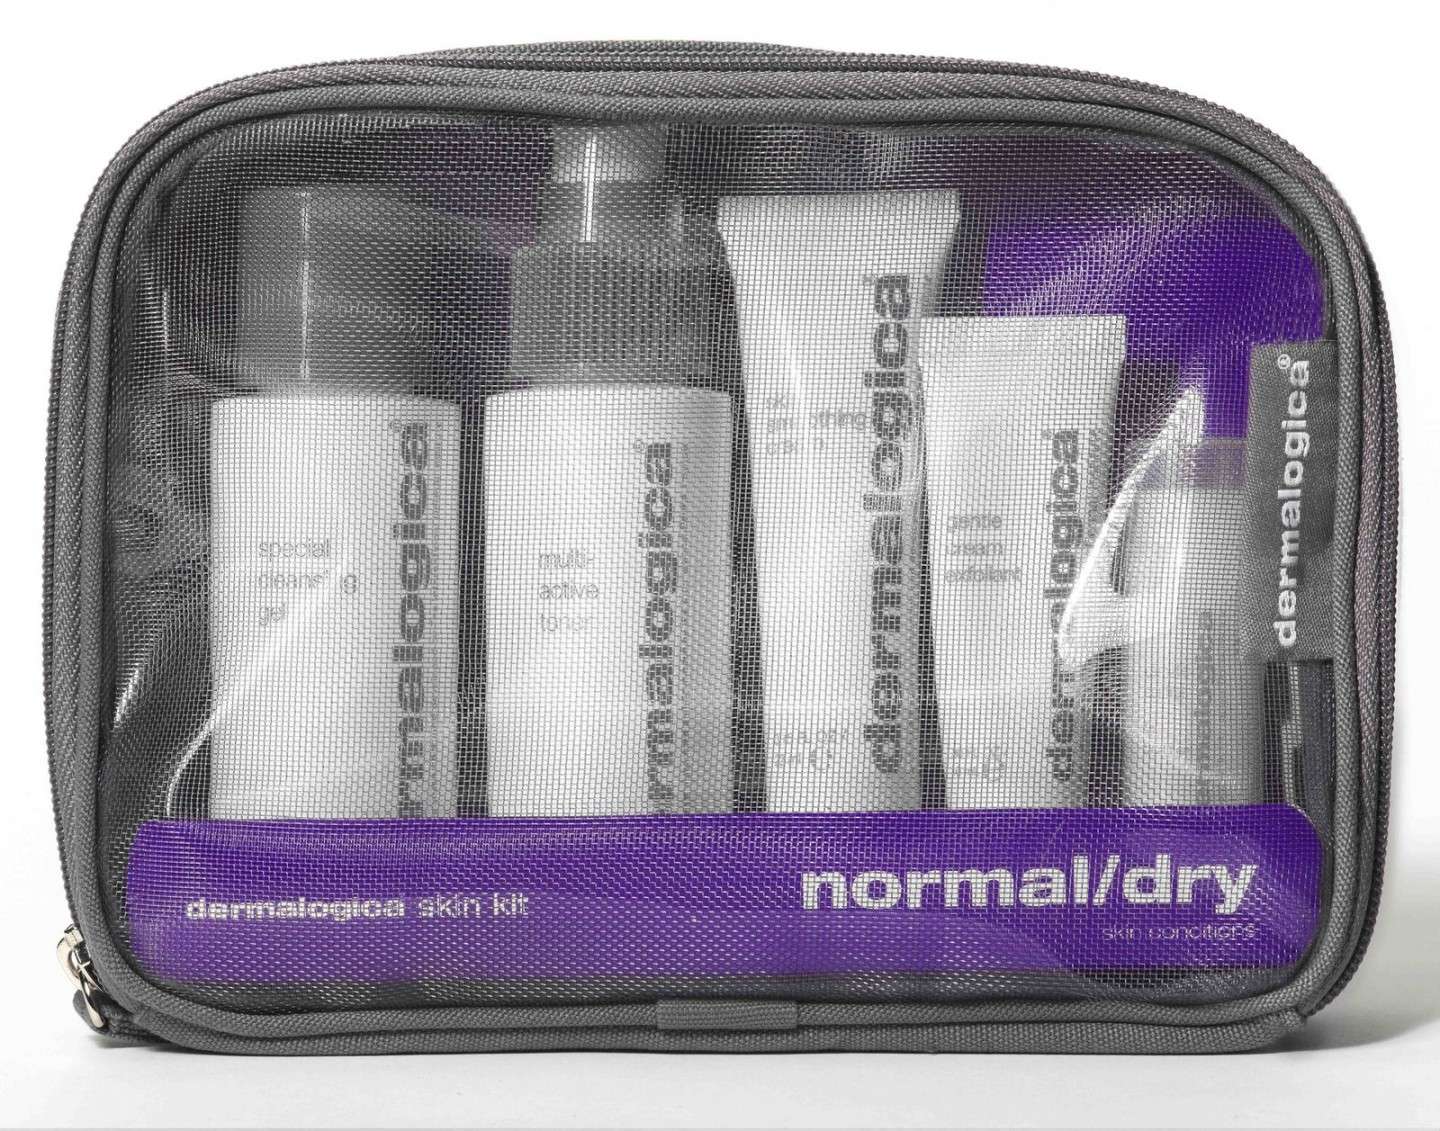 Normal dry skin kit